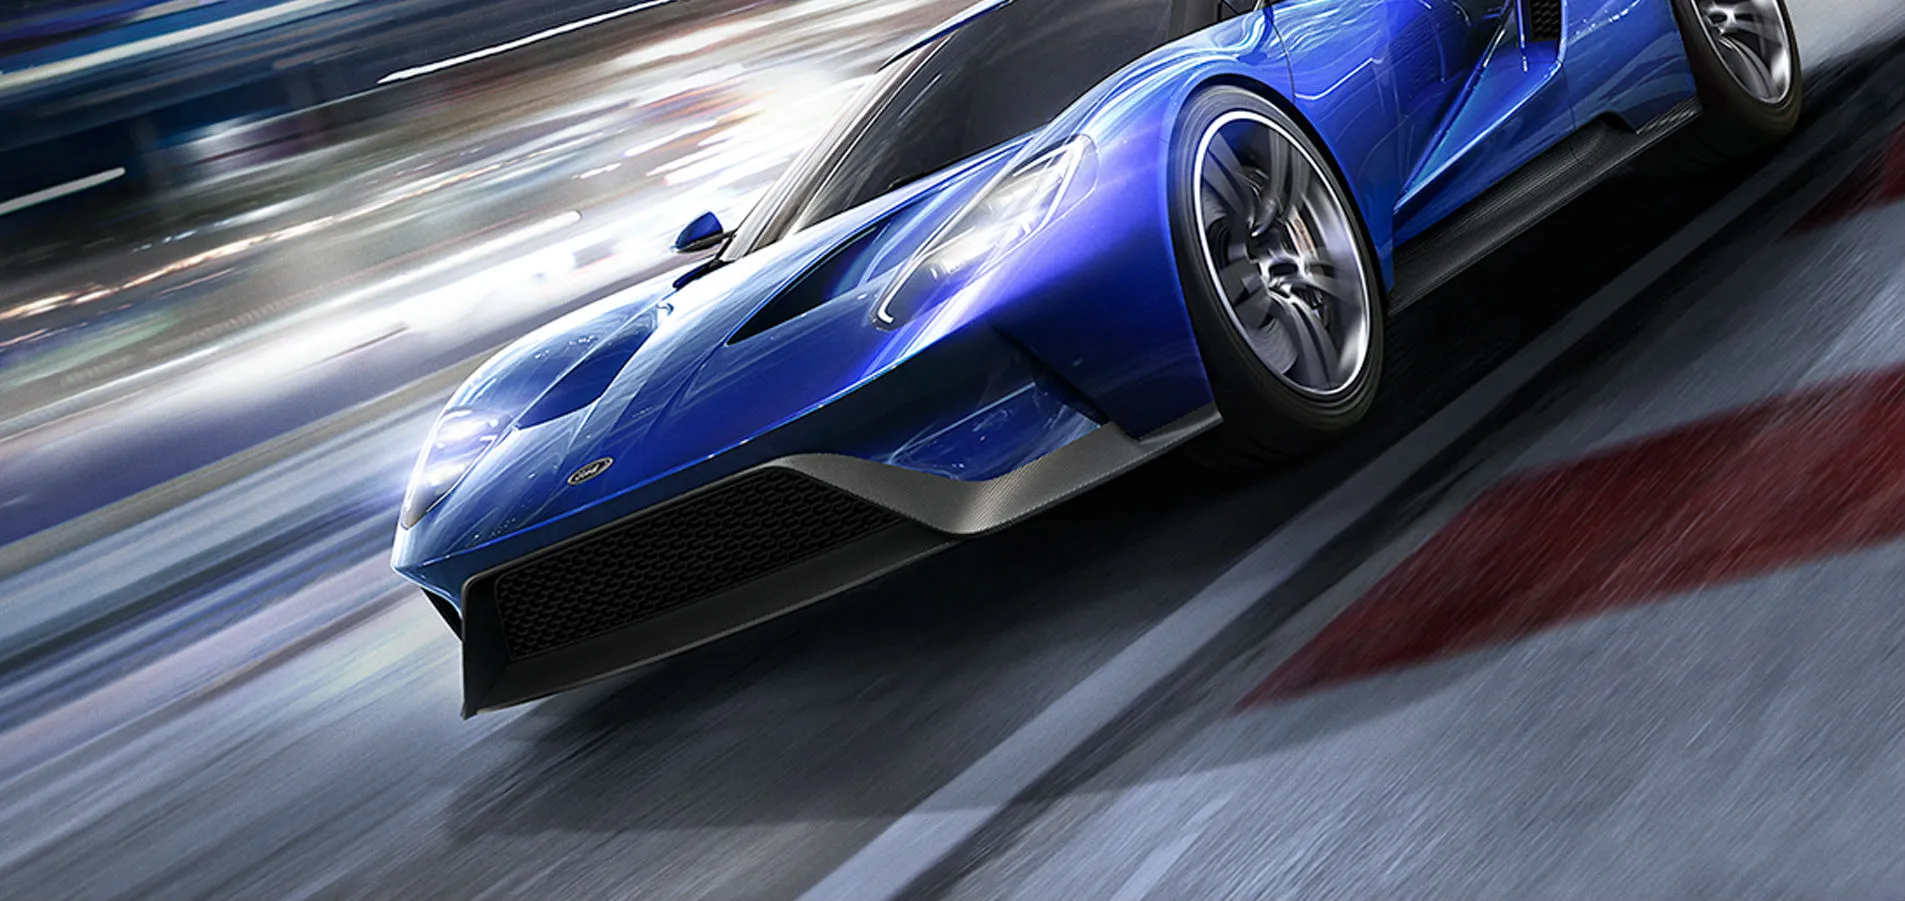 Assetto Corsa vs. Project CARS vs. DriveClub  PS4 Graphics & Sound  Comparison Gameplay 